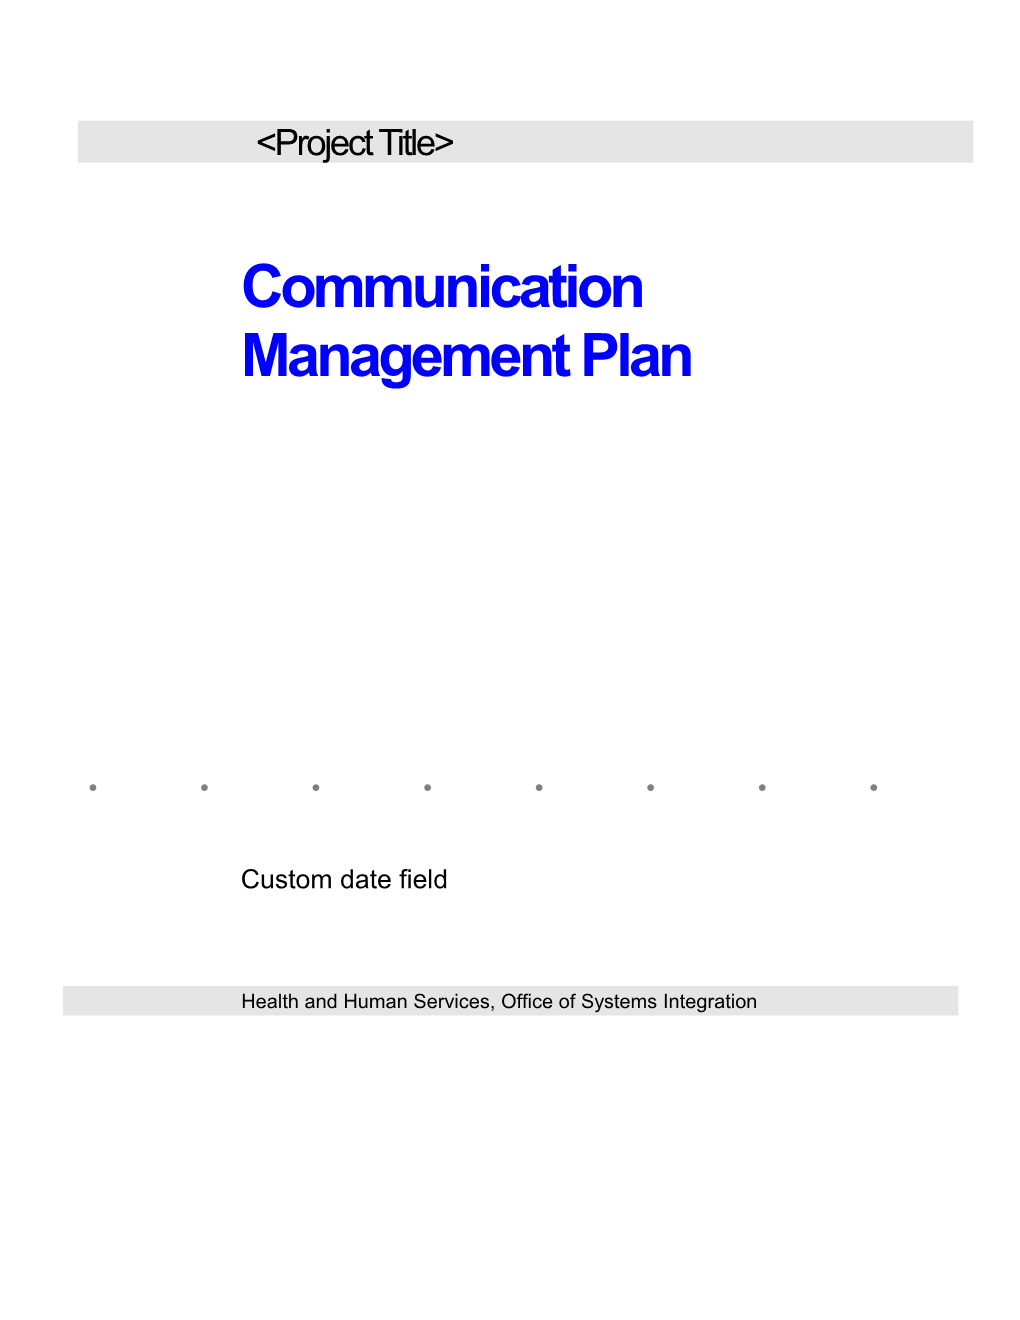 OSI Communication Management Plan Template